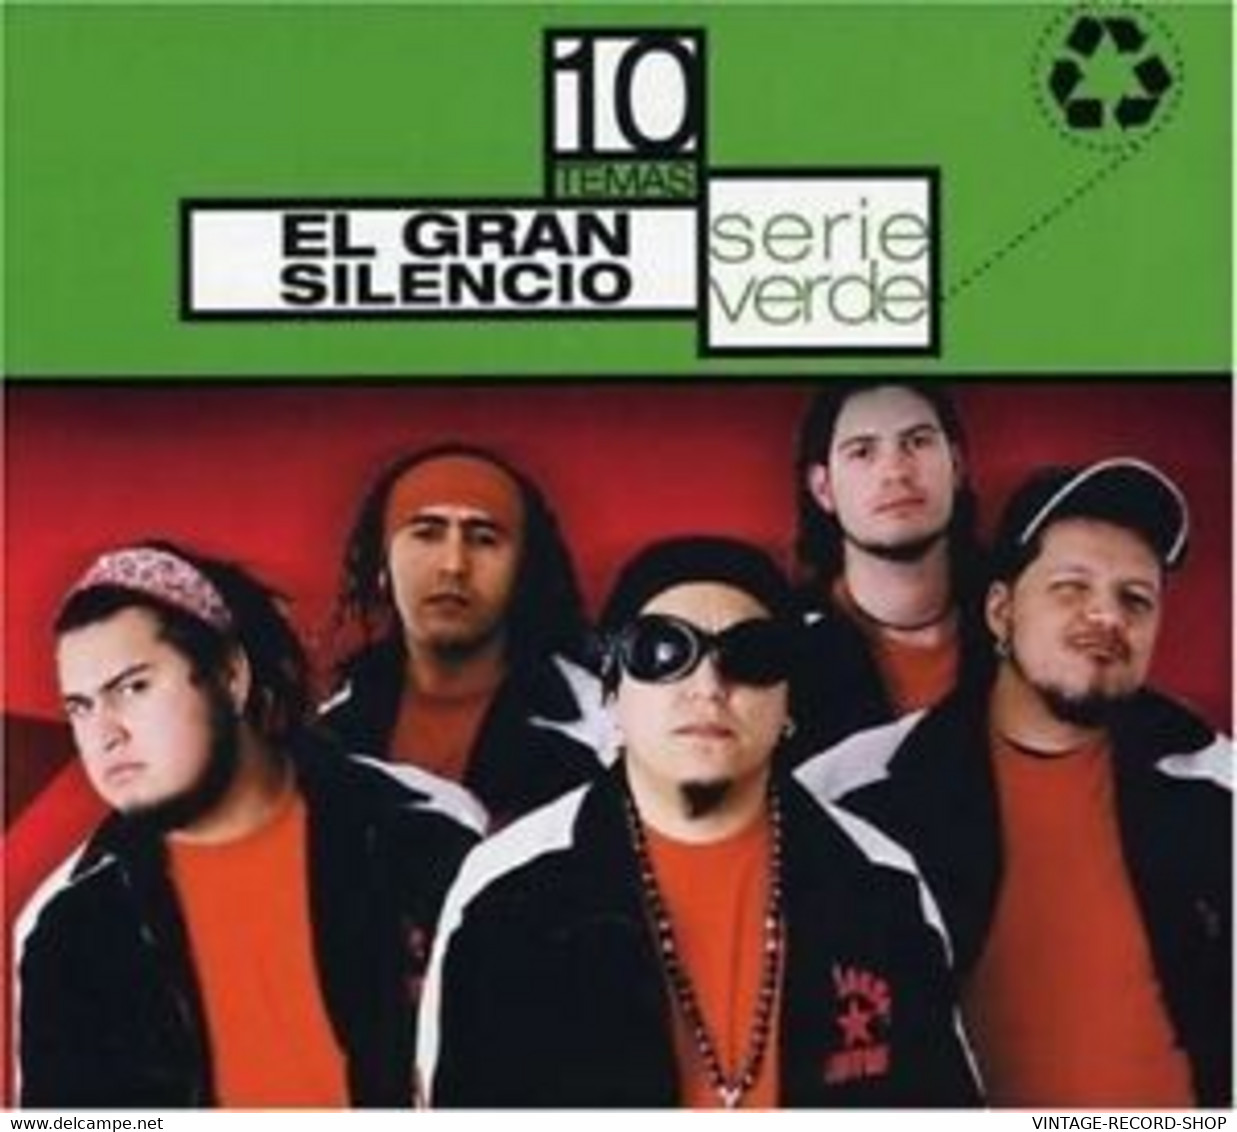 EL GRAN SILENCIO-SERIE VERDE 10 TEMAS-EMI -TELEVISA-MUSIC-2007 CD - Other - Spanish Music